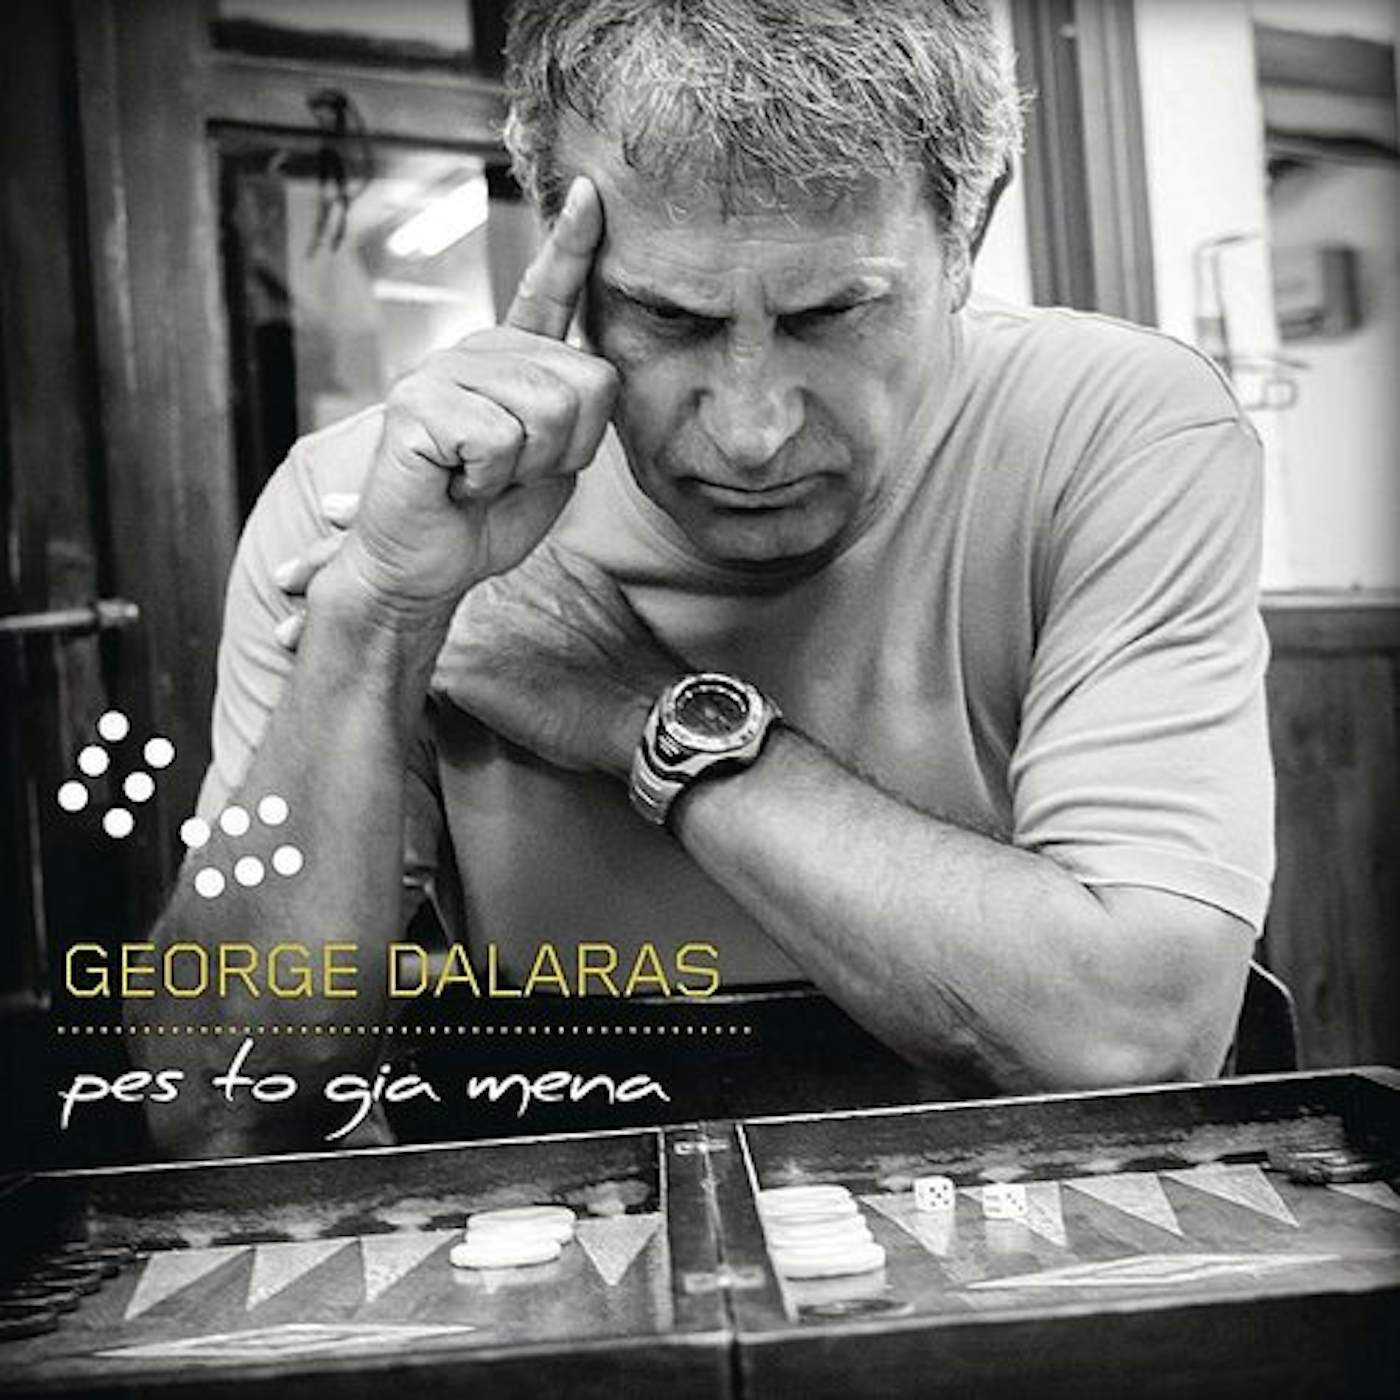 George Dalaras PESTO GIA MENA Vinyl Record